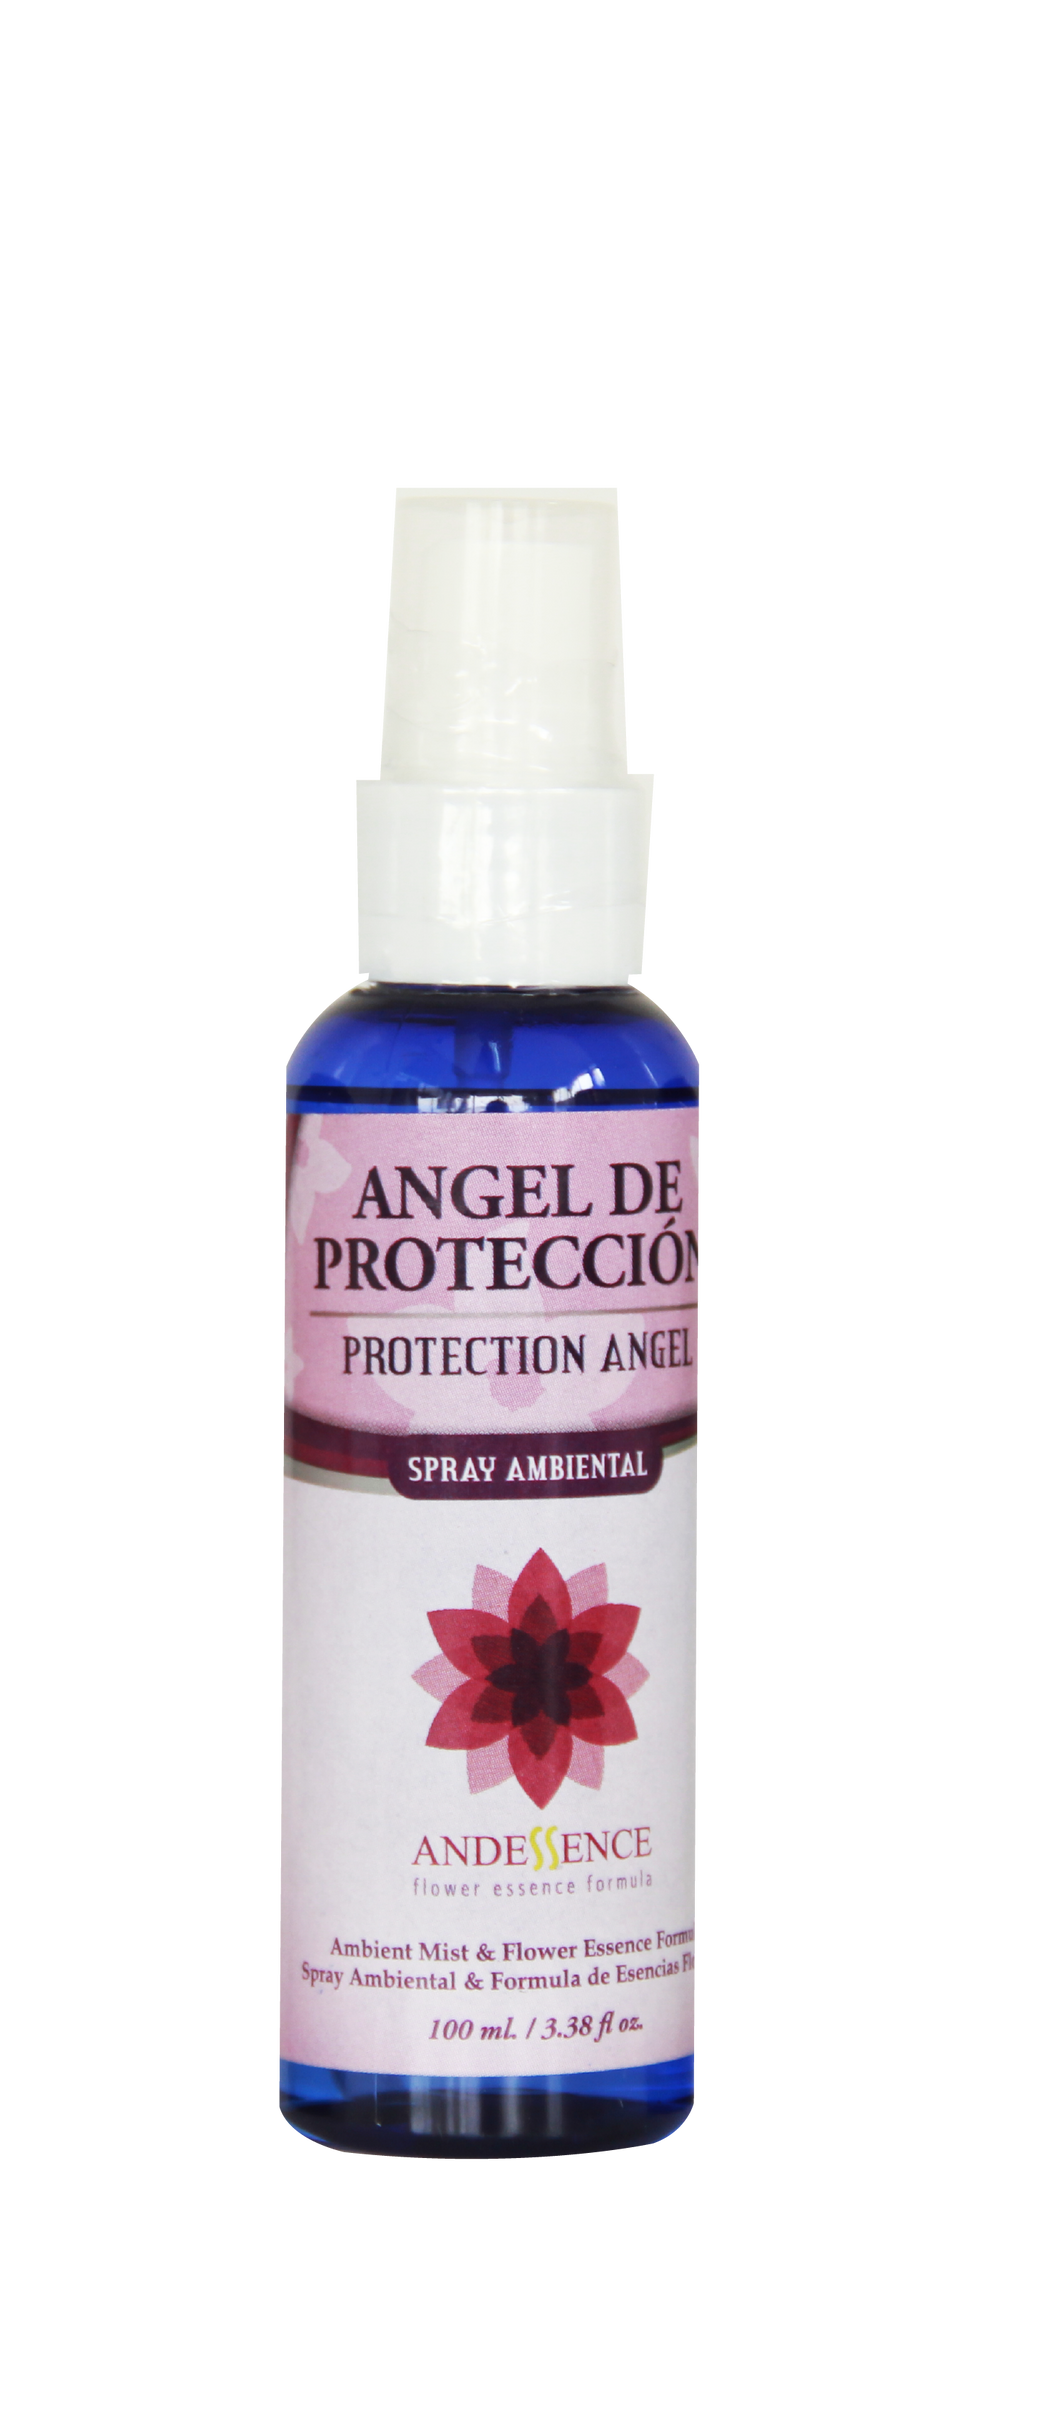 Andessence Angel de Proteccion/Angel Protection